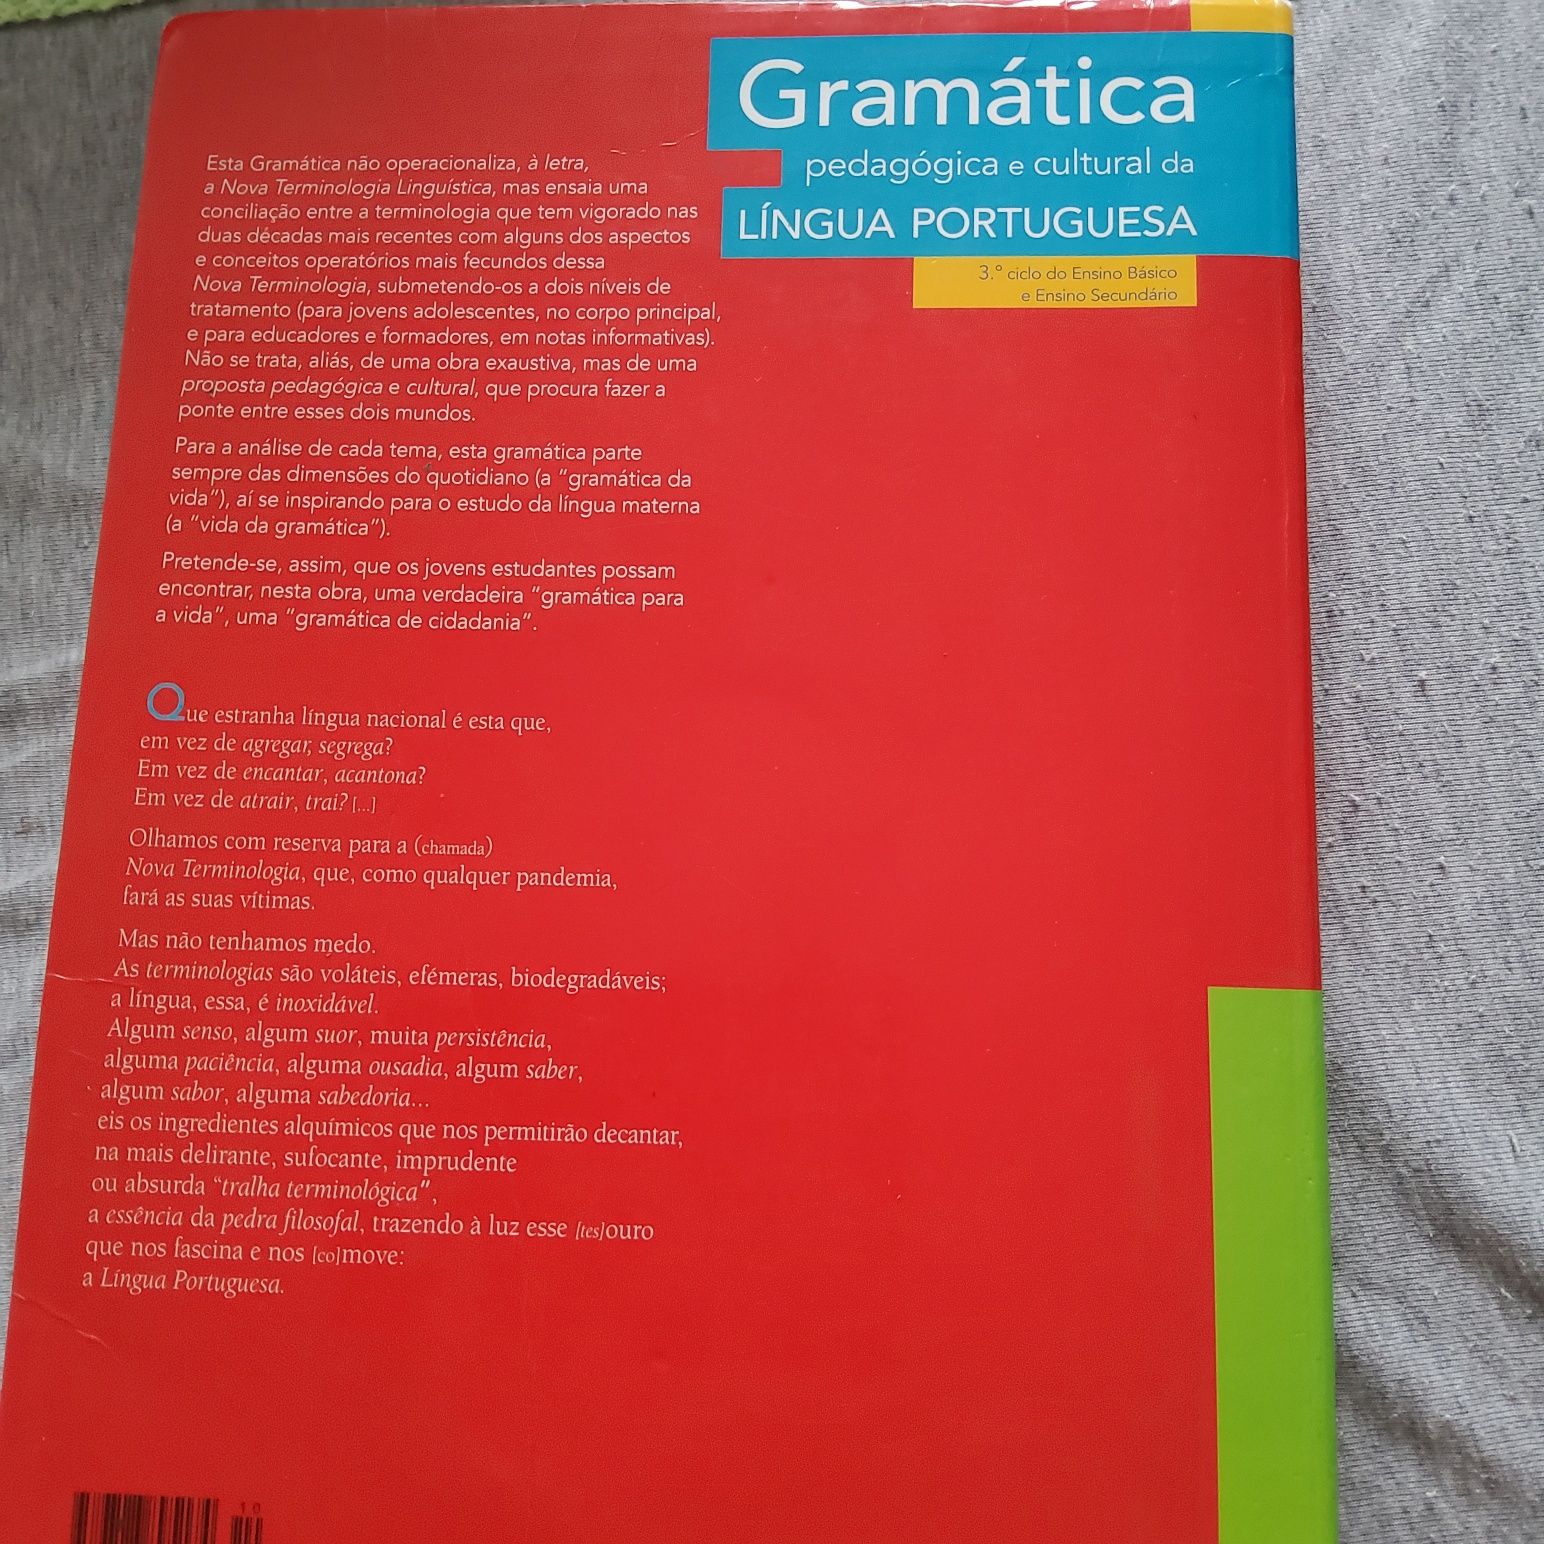 Gramática pedagógica e cultural da Língua Portuguesa - 3.º Ciclo